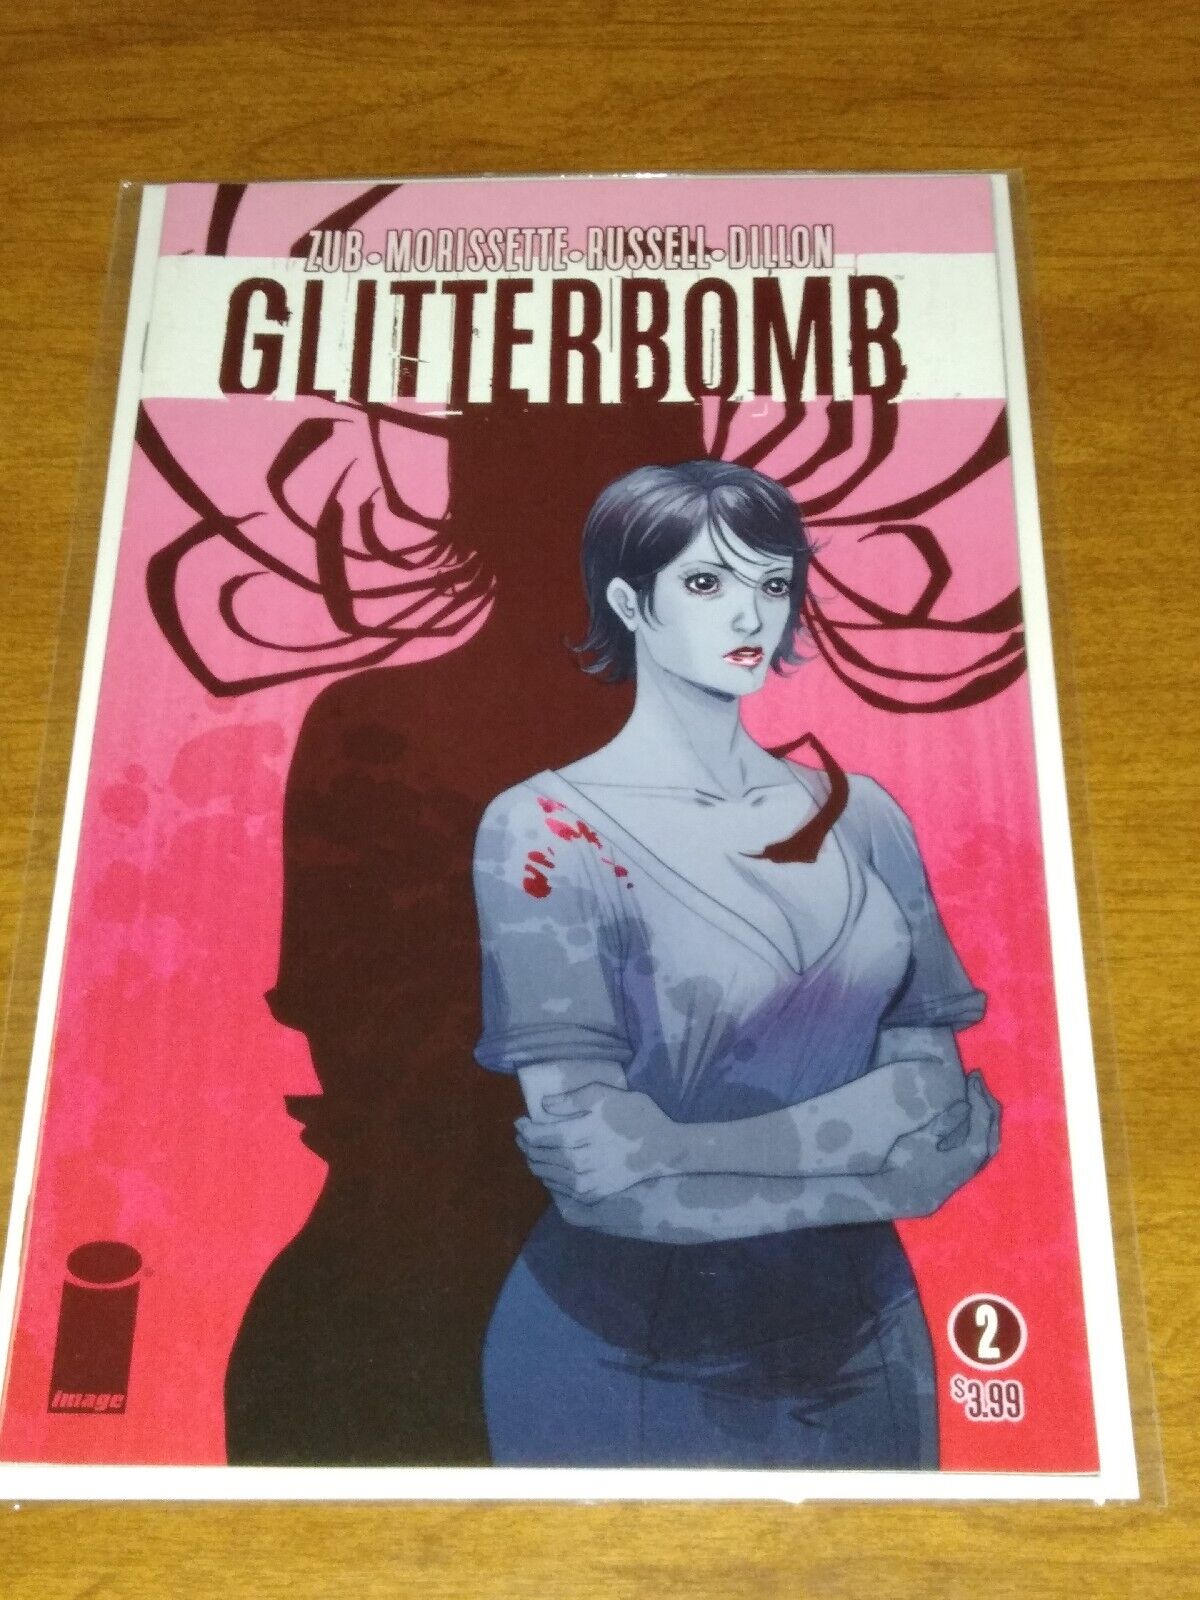 Glitterbomb #2 B Cover Image Comics Zub Morissette Russell